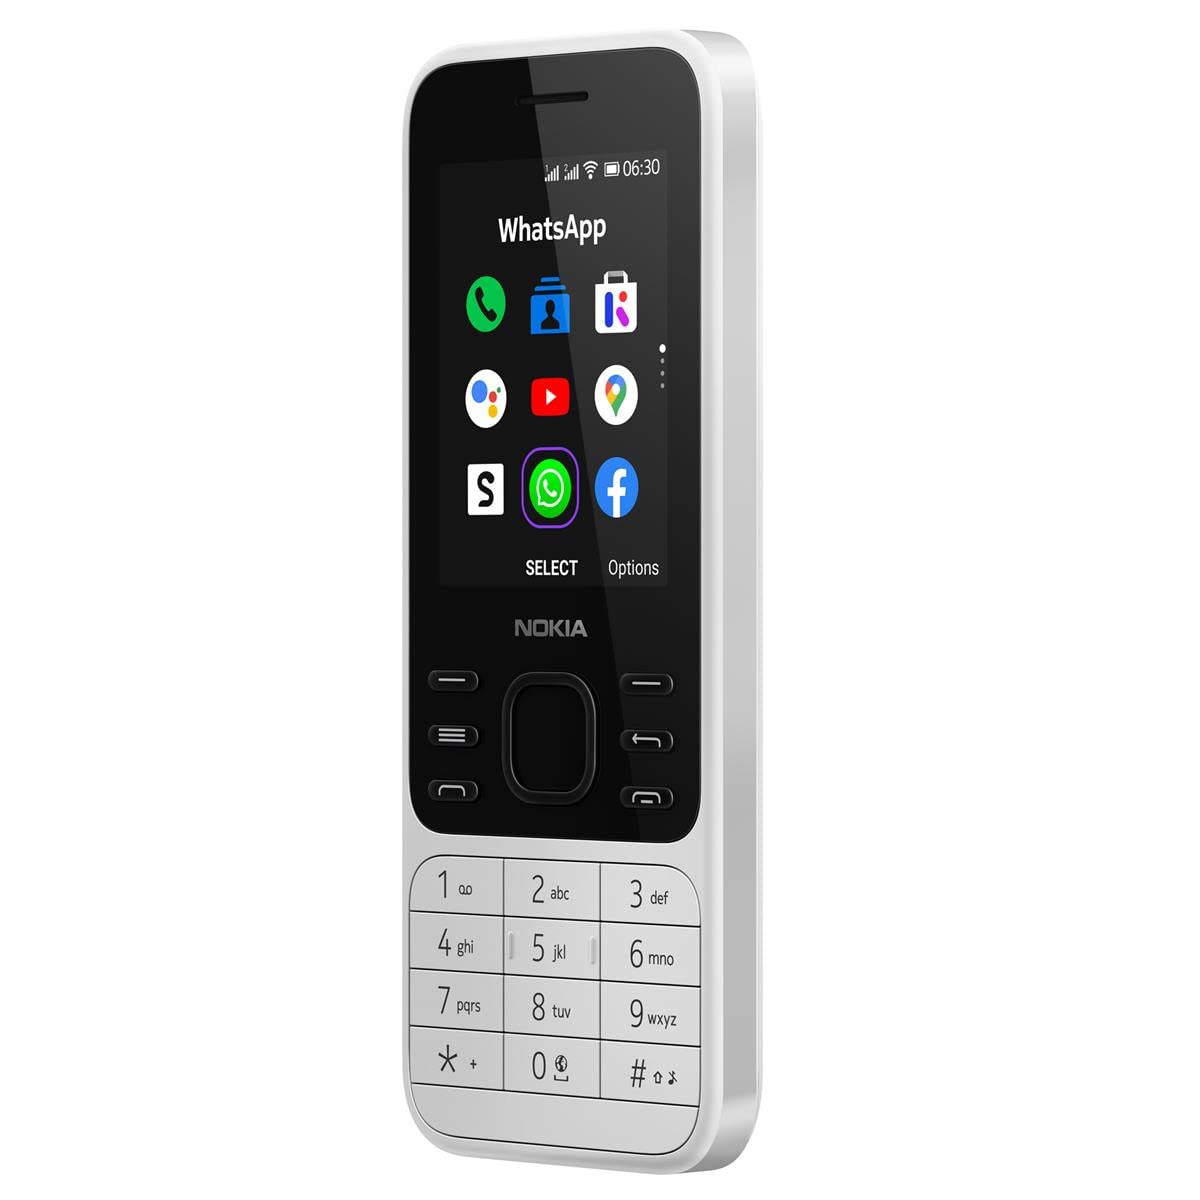 Nokia 6300 4G | Unlocked | Dual SIM | WiFi Hotspot | Social Apps | Google Maps and Assistant | Powder White